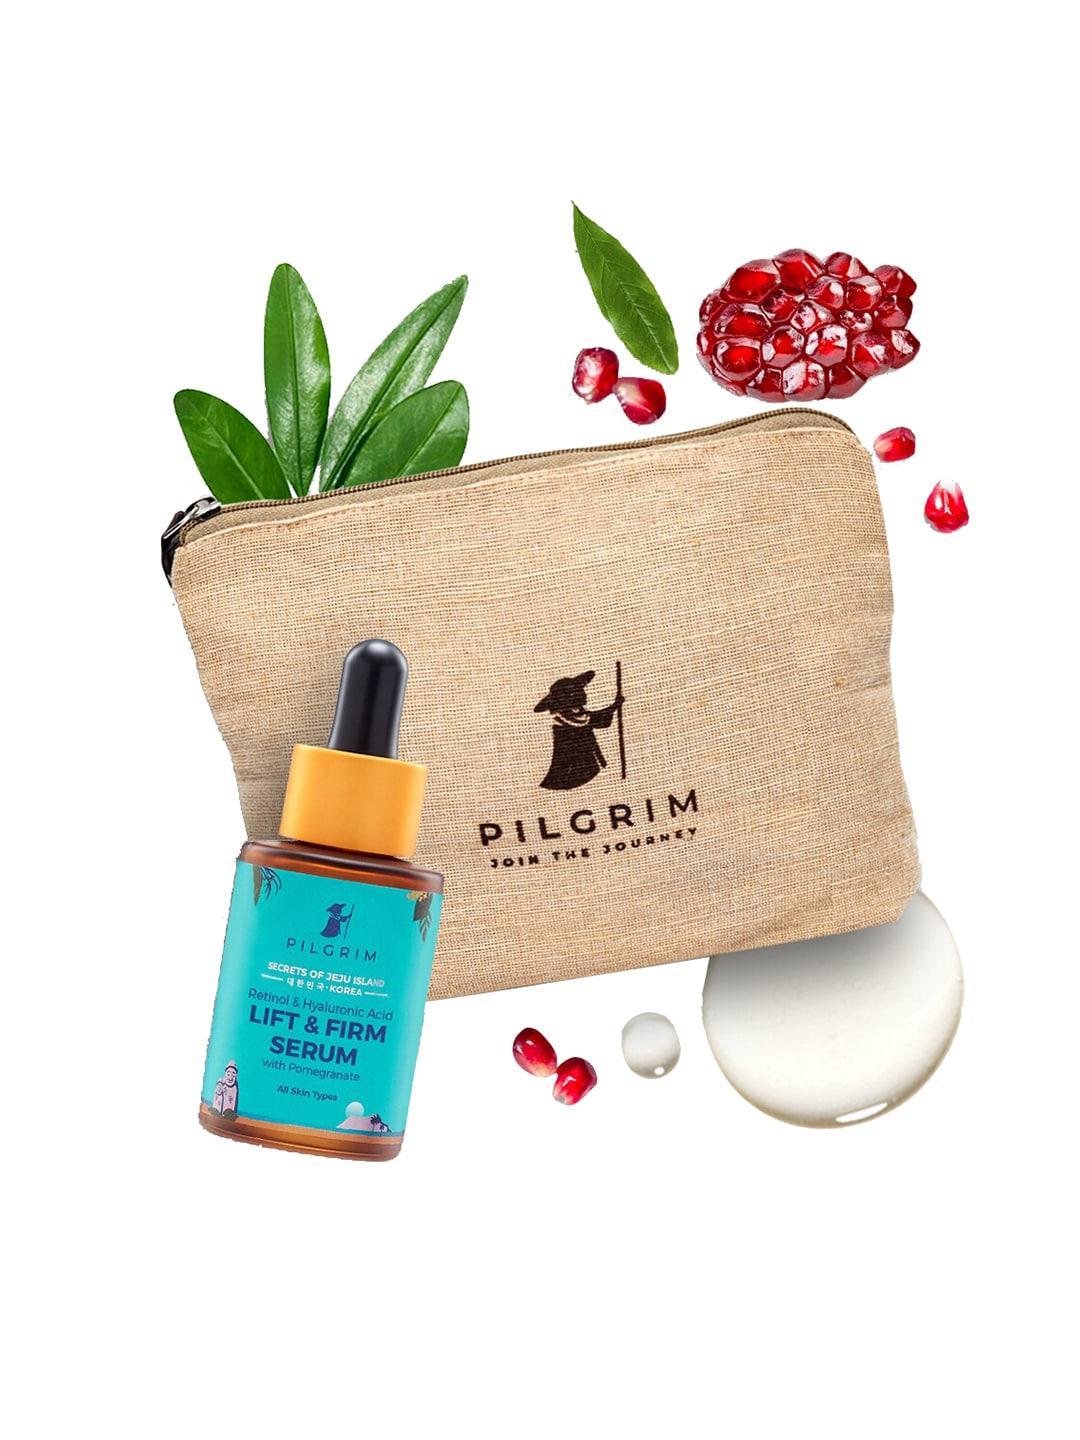 Pilgrim Retinol Hyaluronic Acid Lift & Firm Face Serum with Pomegranate 30ml with Jute Bag